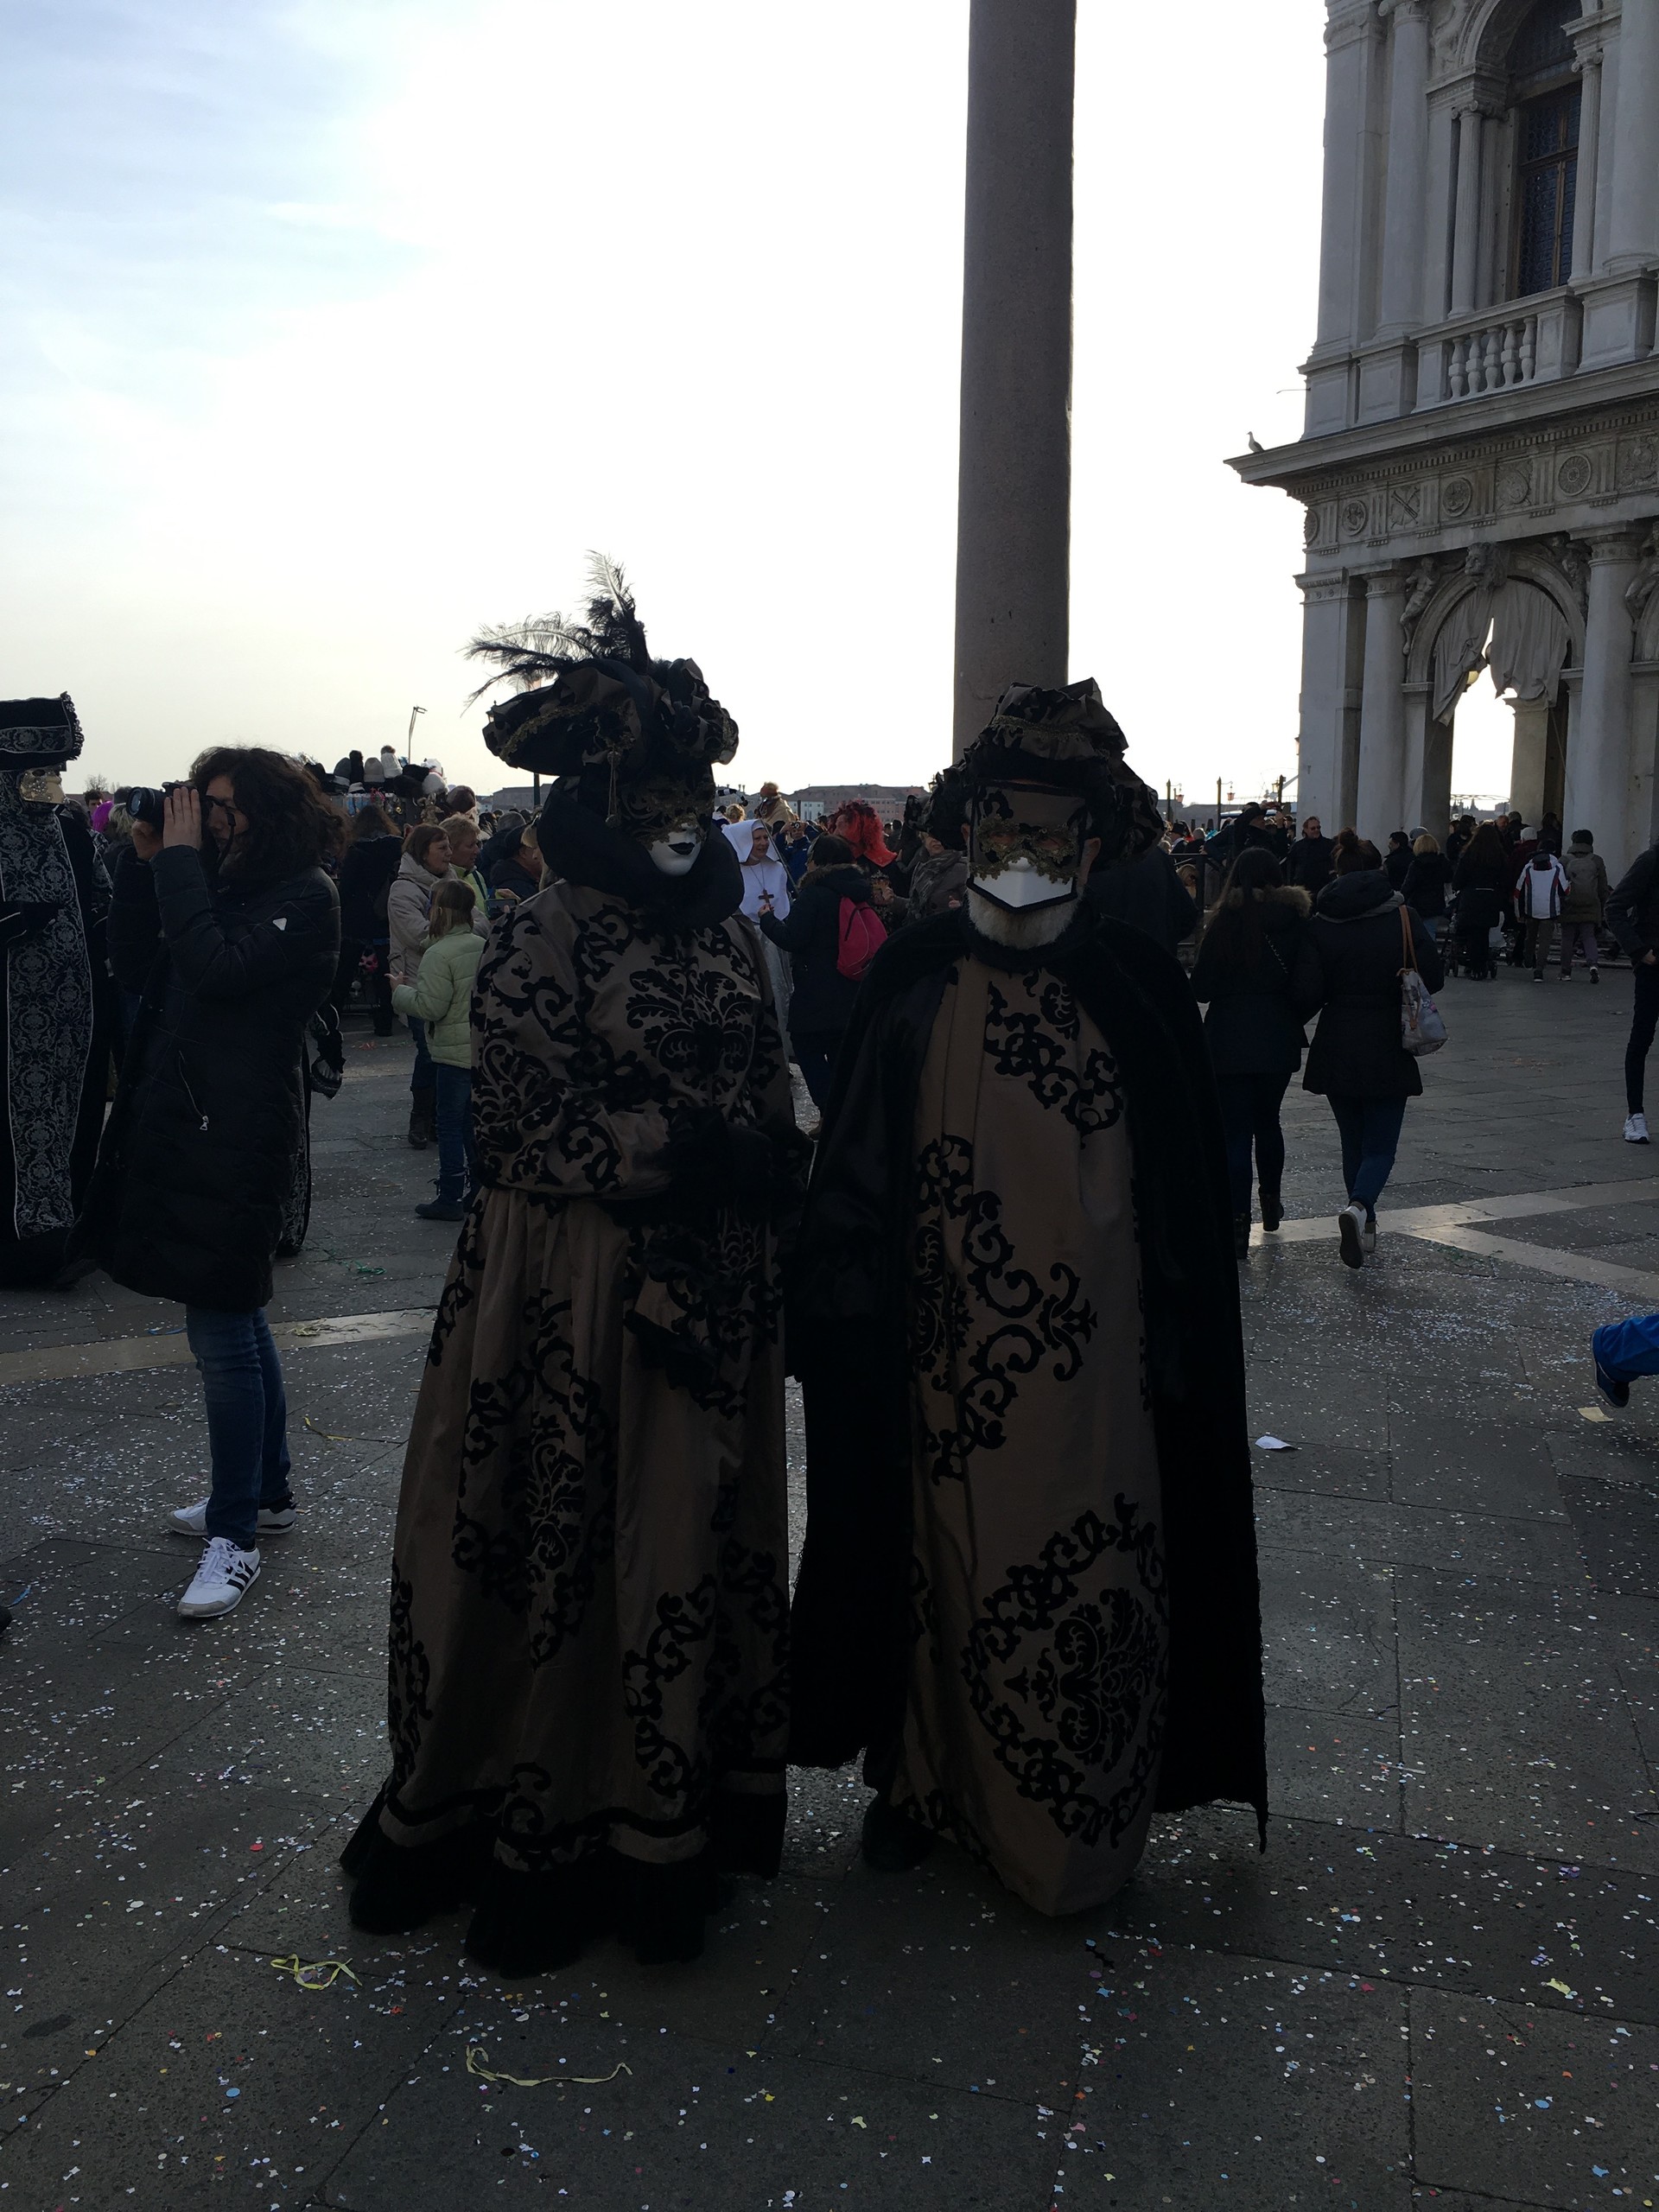 Get lost in the magic of Venetian Carnival